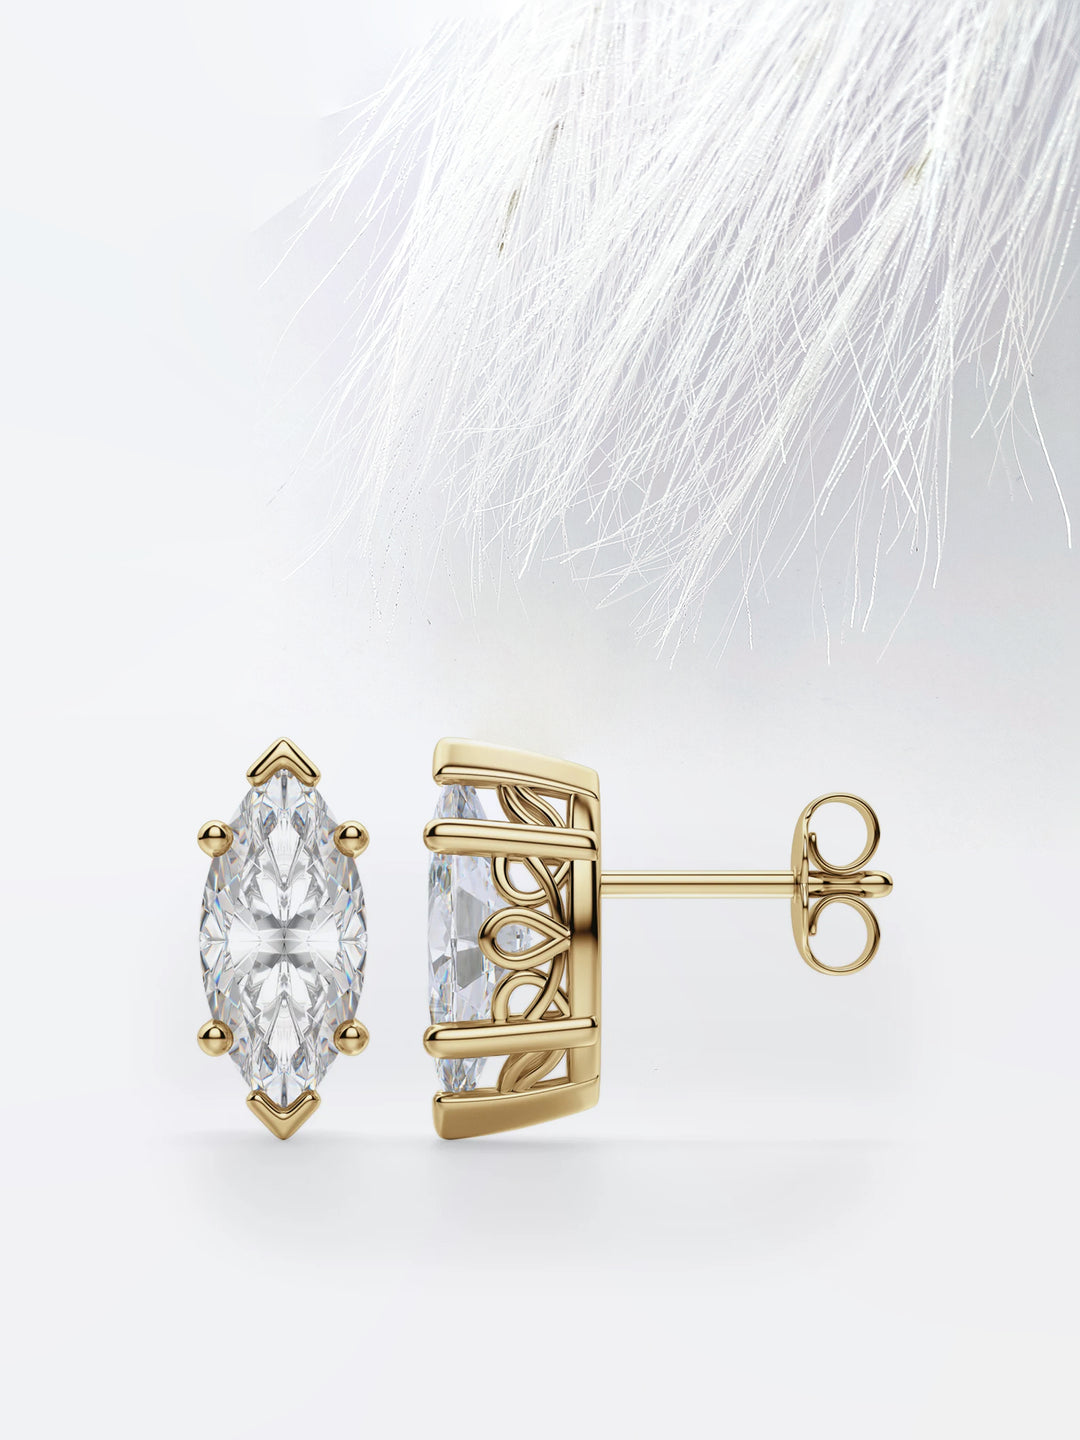 Marquise Cut Moissanite Diamond Studs Earrings in 18K White Gold